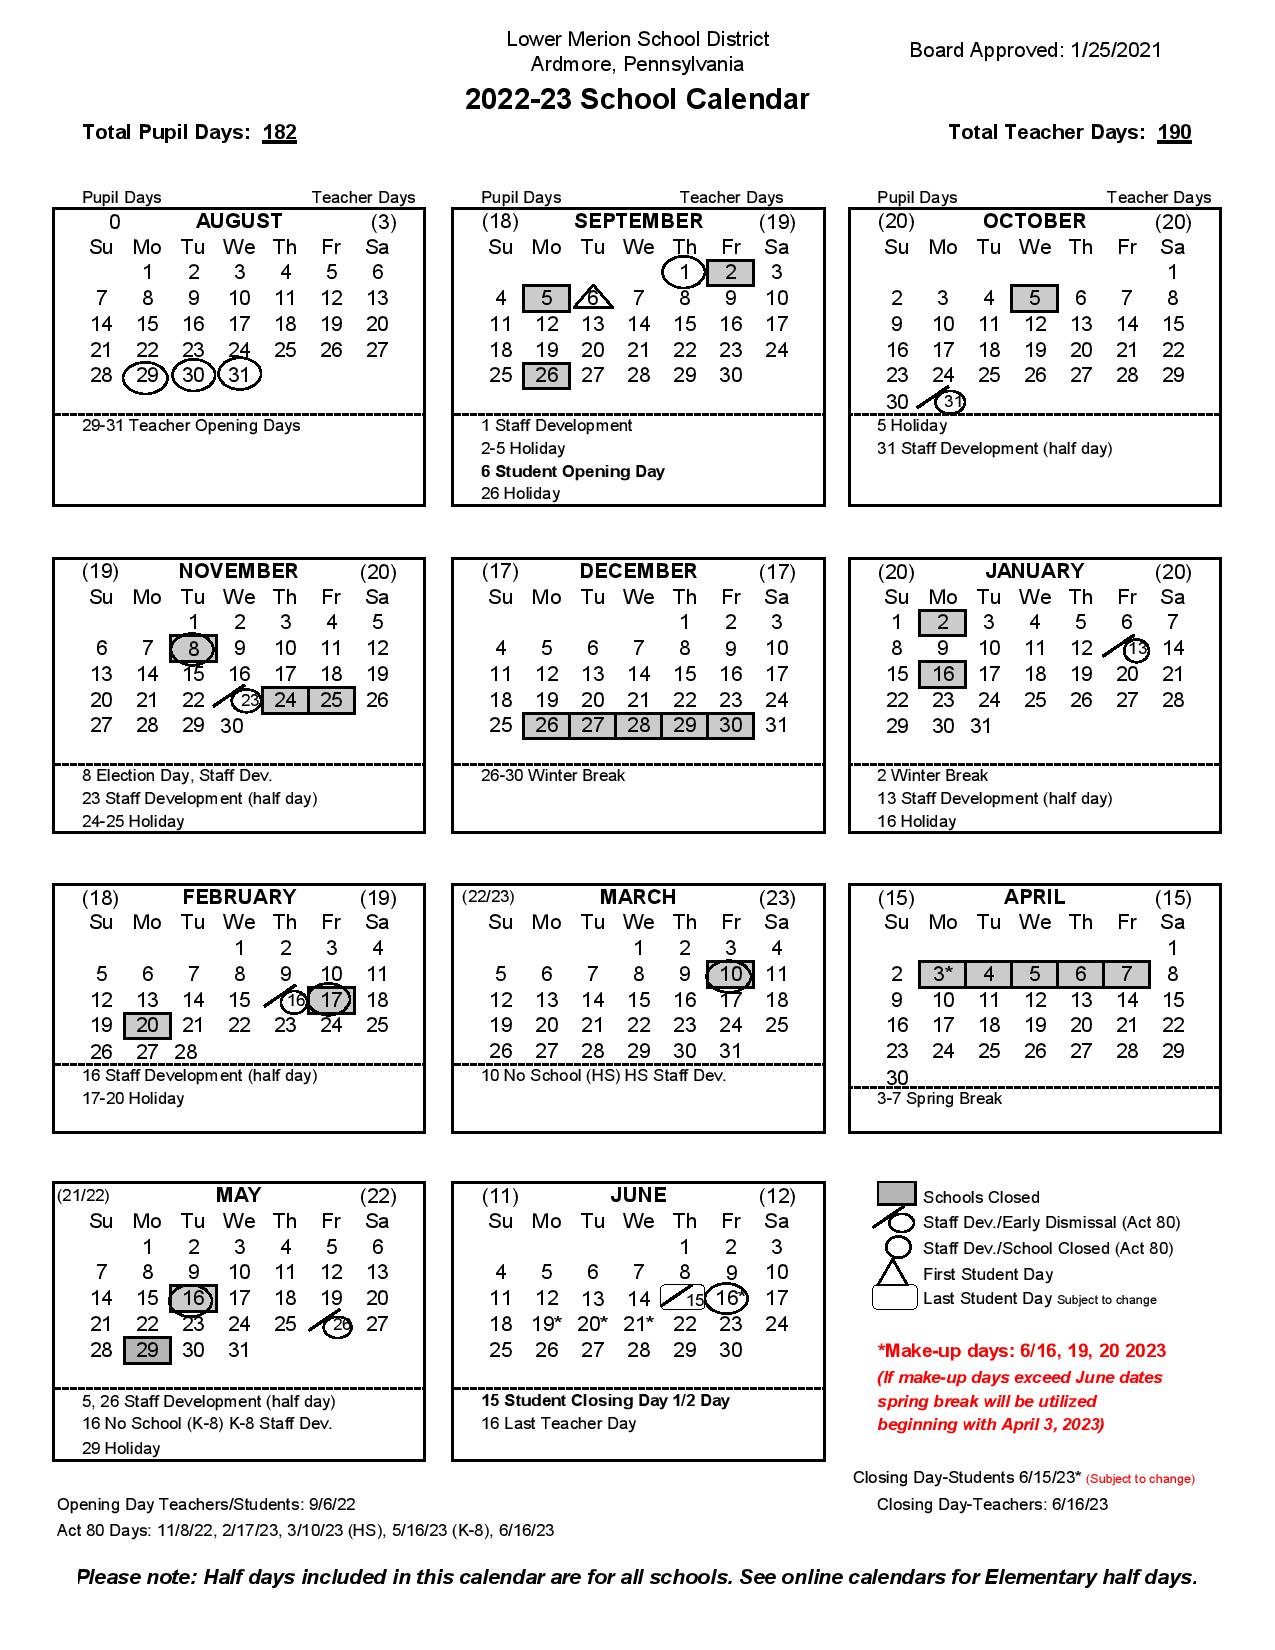 Lower Merion School District Calendar 20222023 in PDF